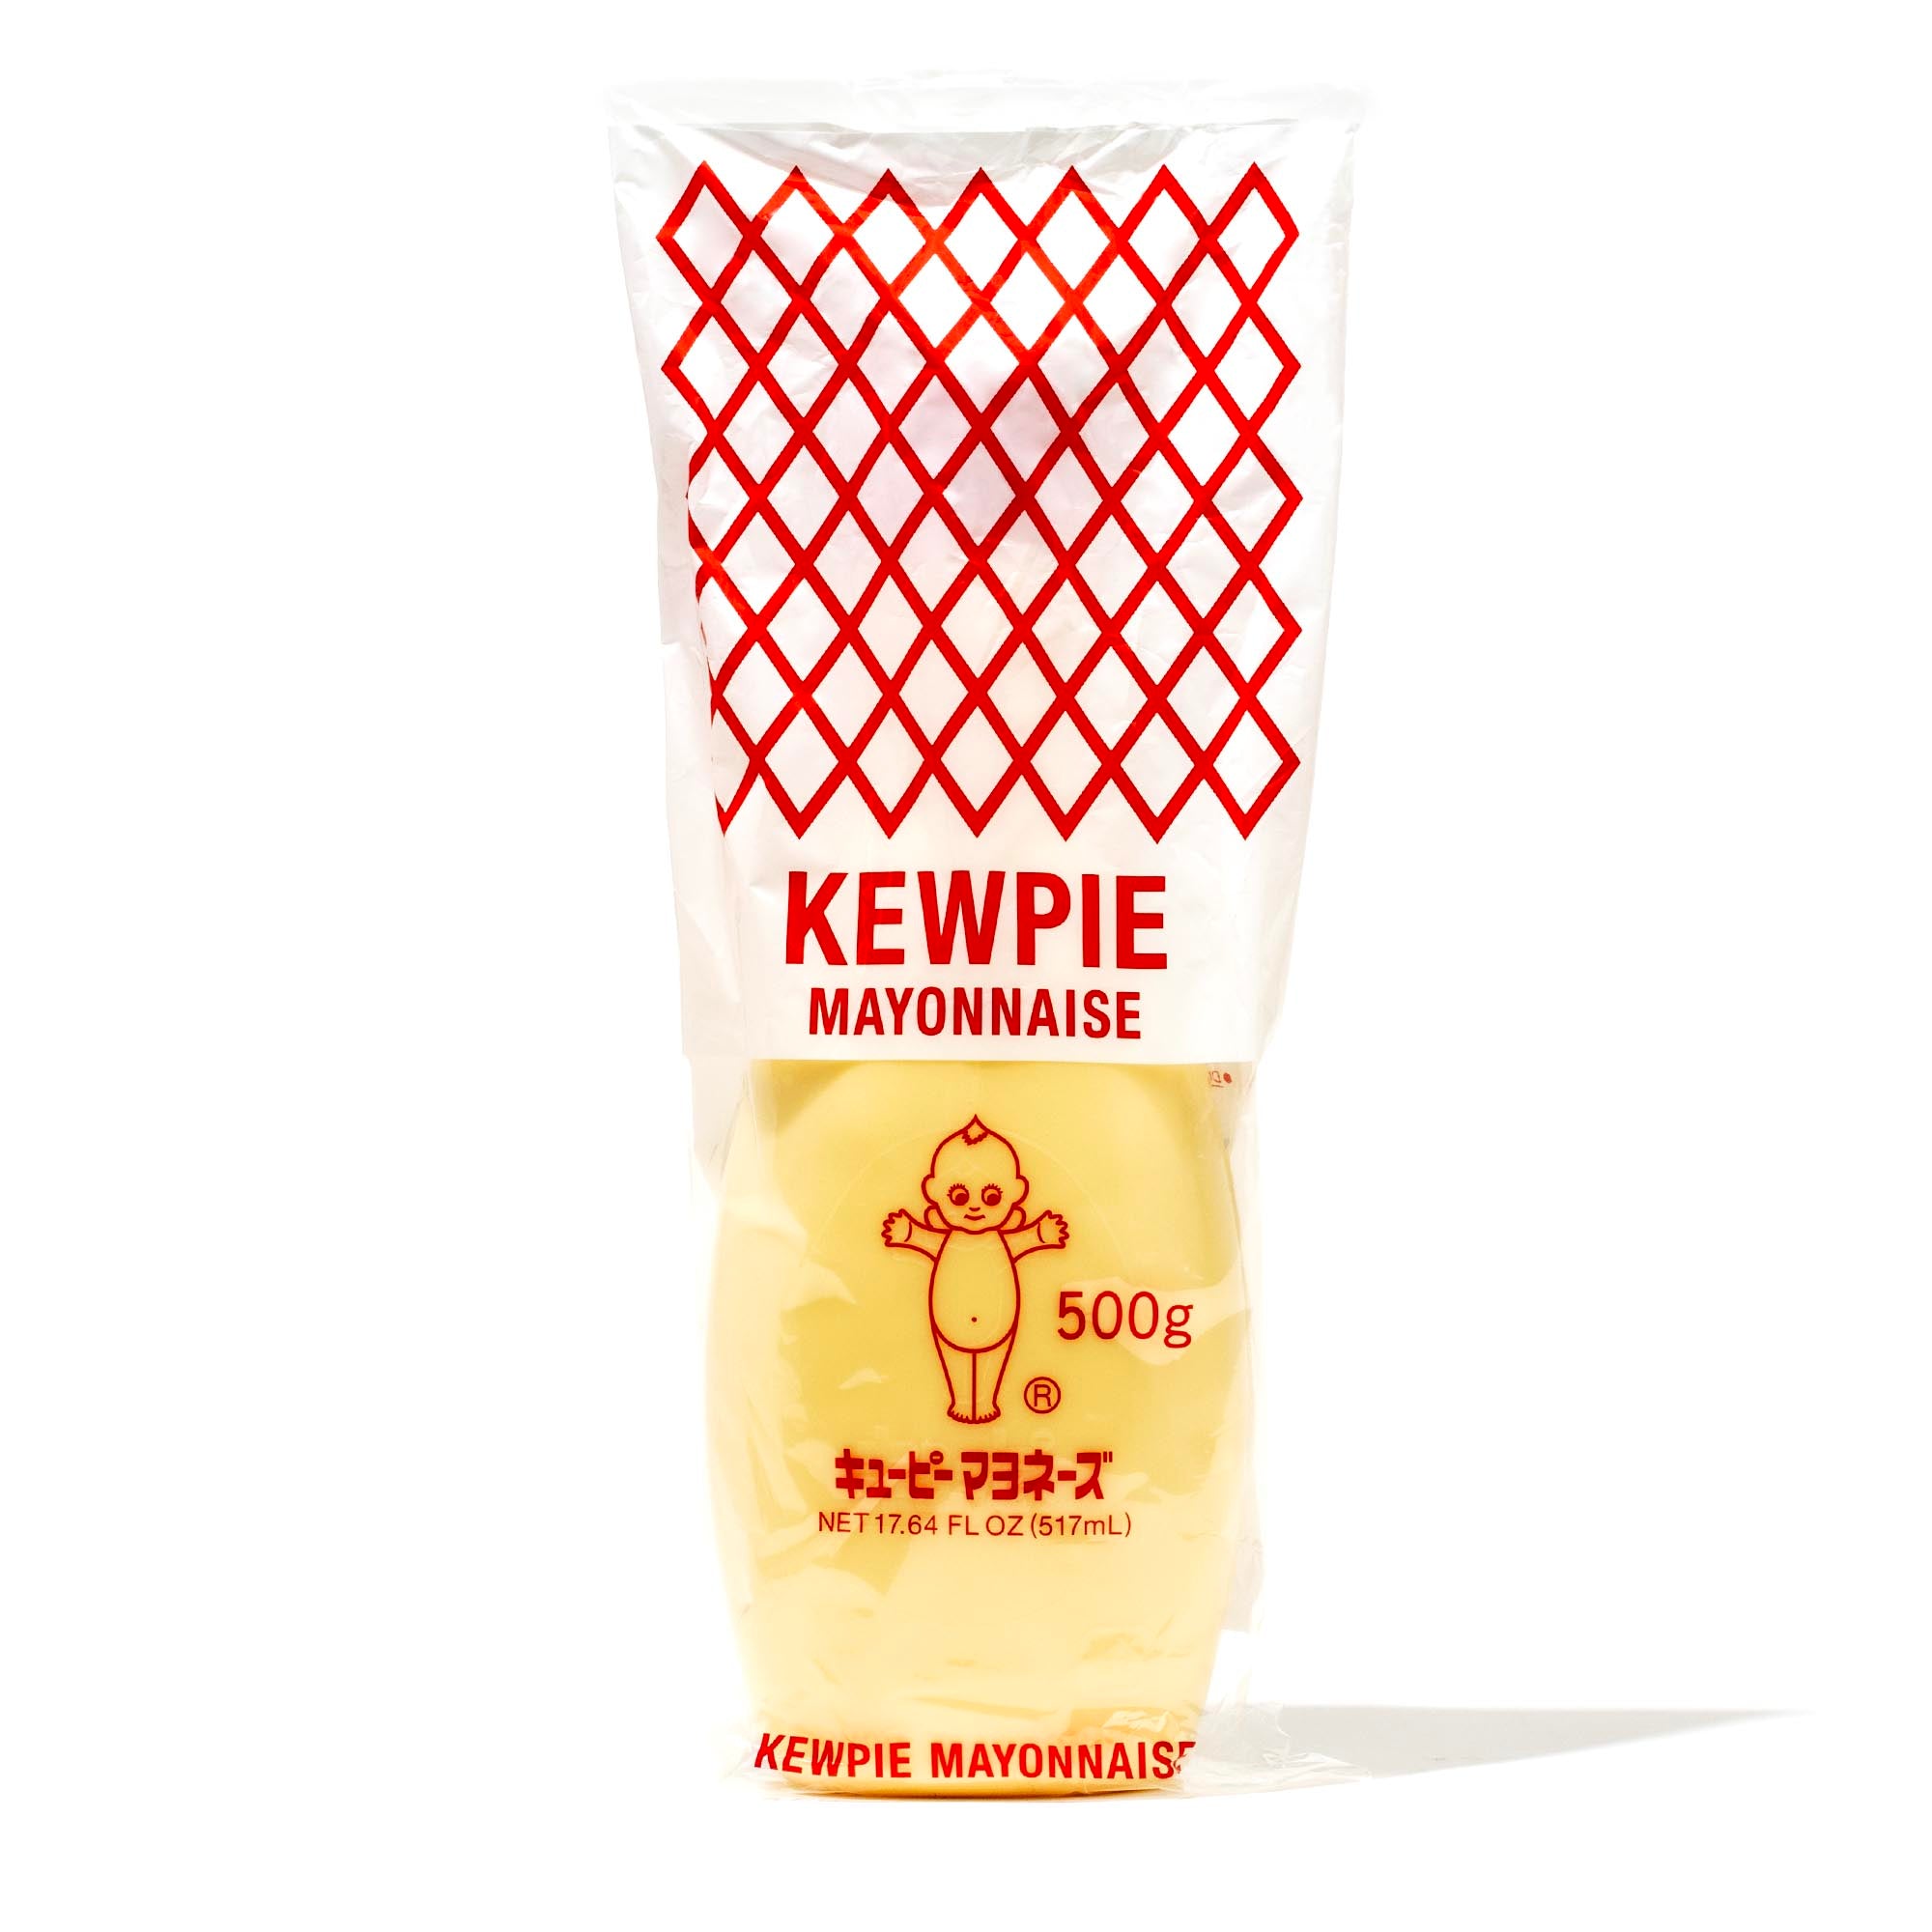 KEWPIE Original Japanese Mayonnaise 450g - Made in Japan